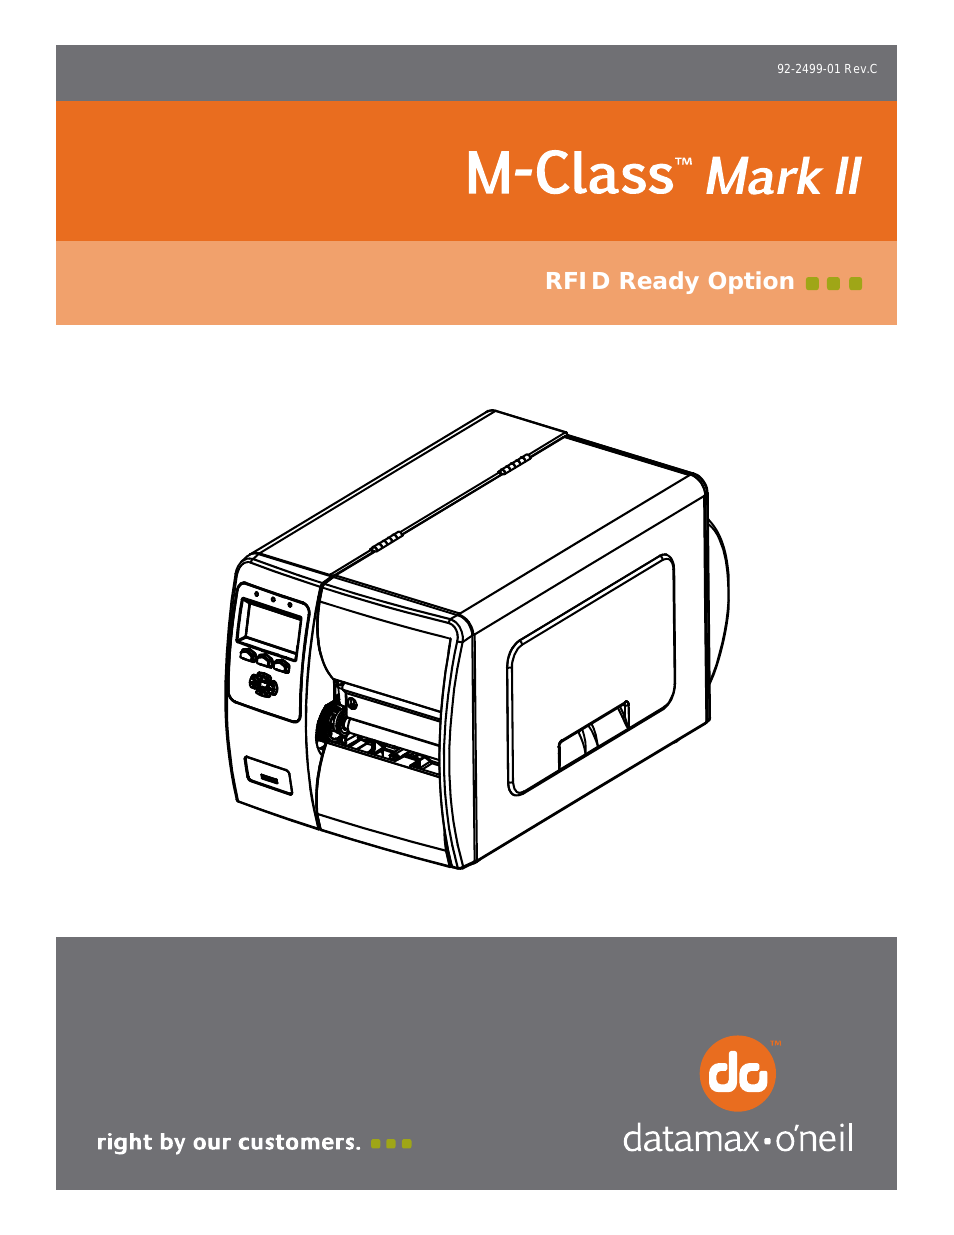 M-Class Mark II RFID Ready Option